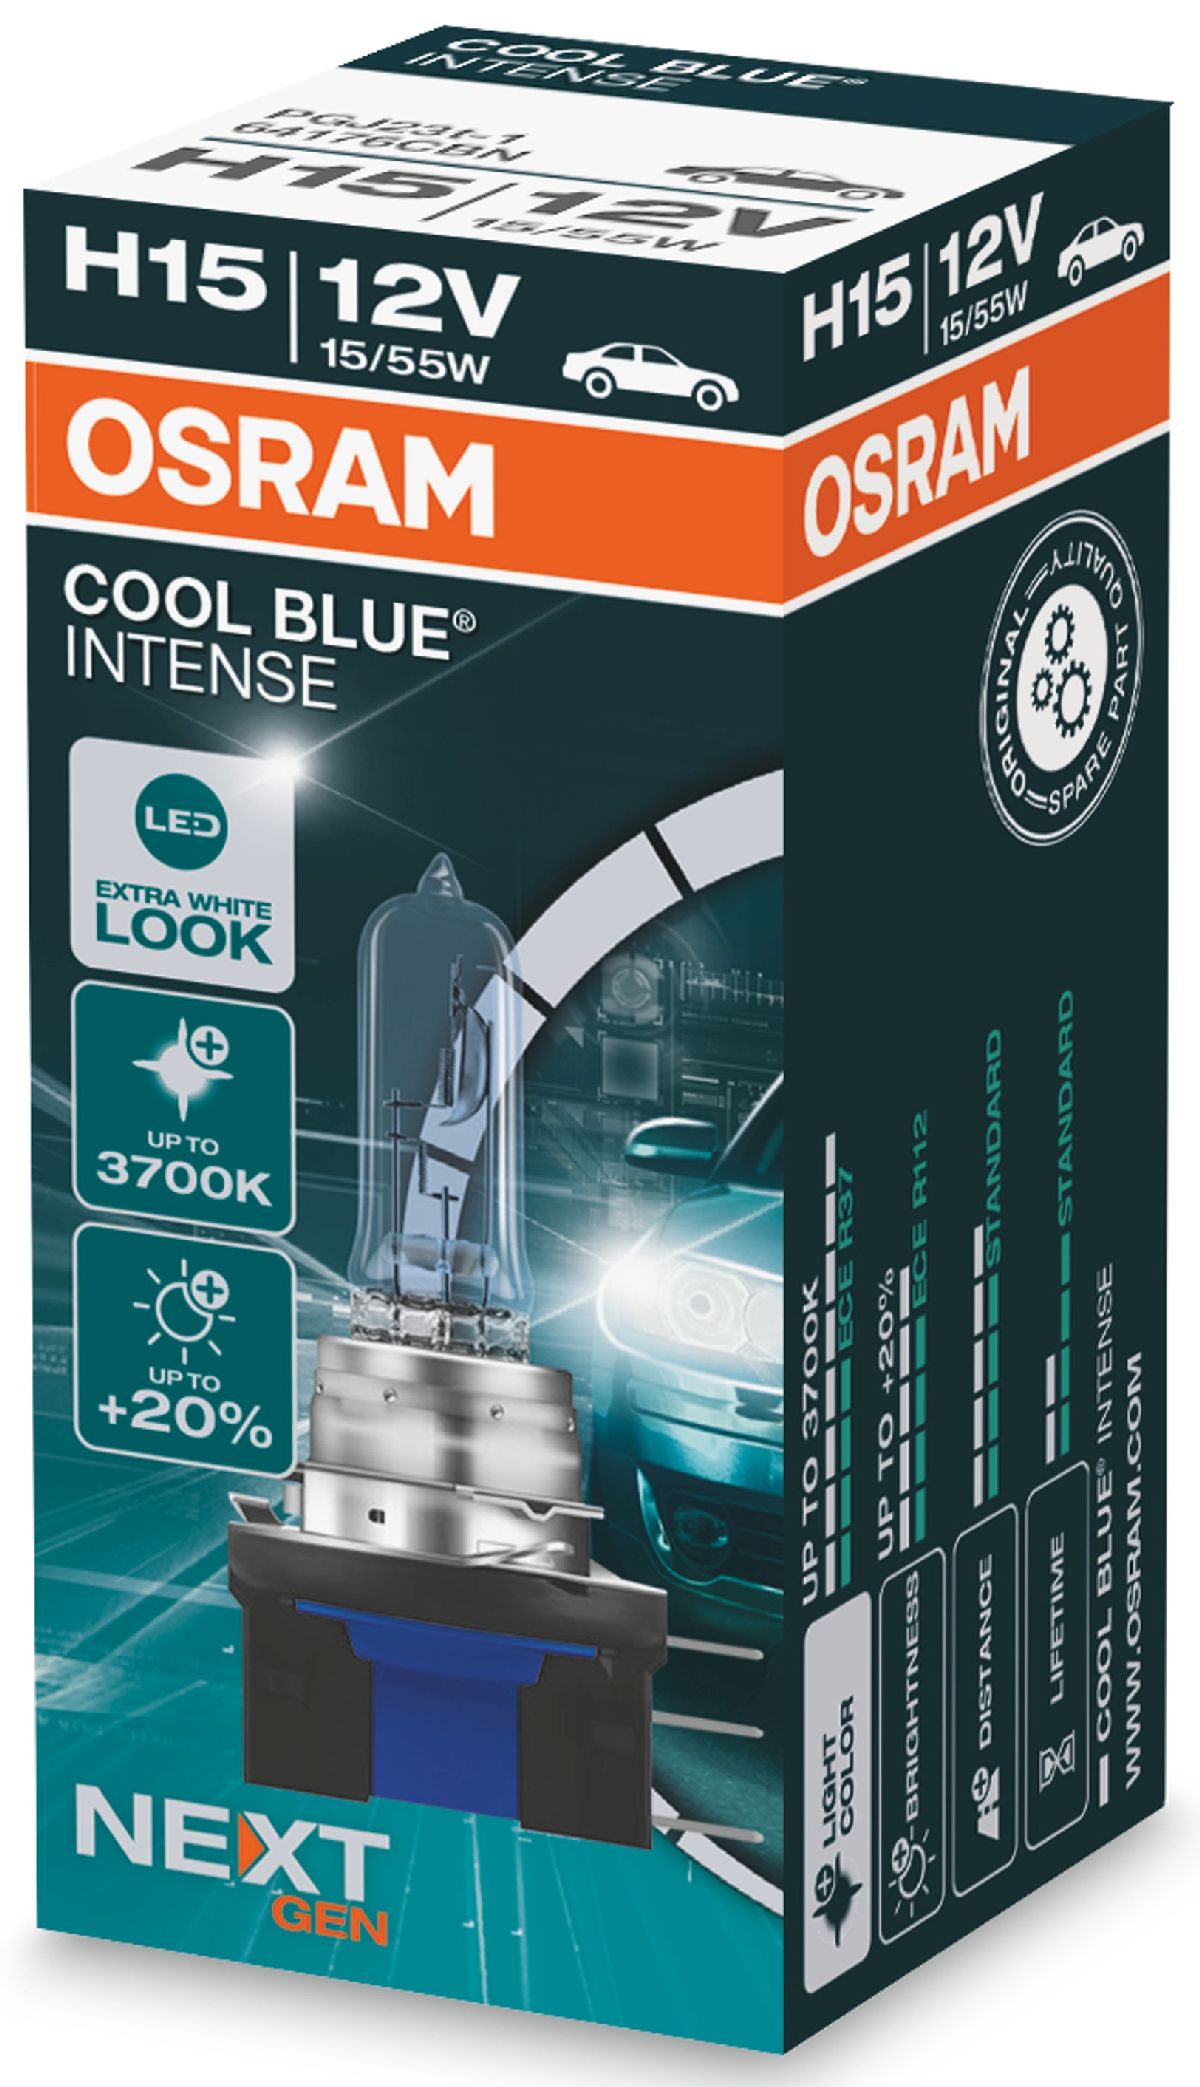 OSRAM Cool blue intense H15